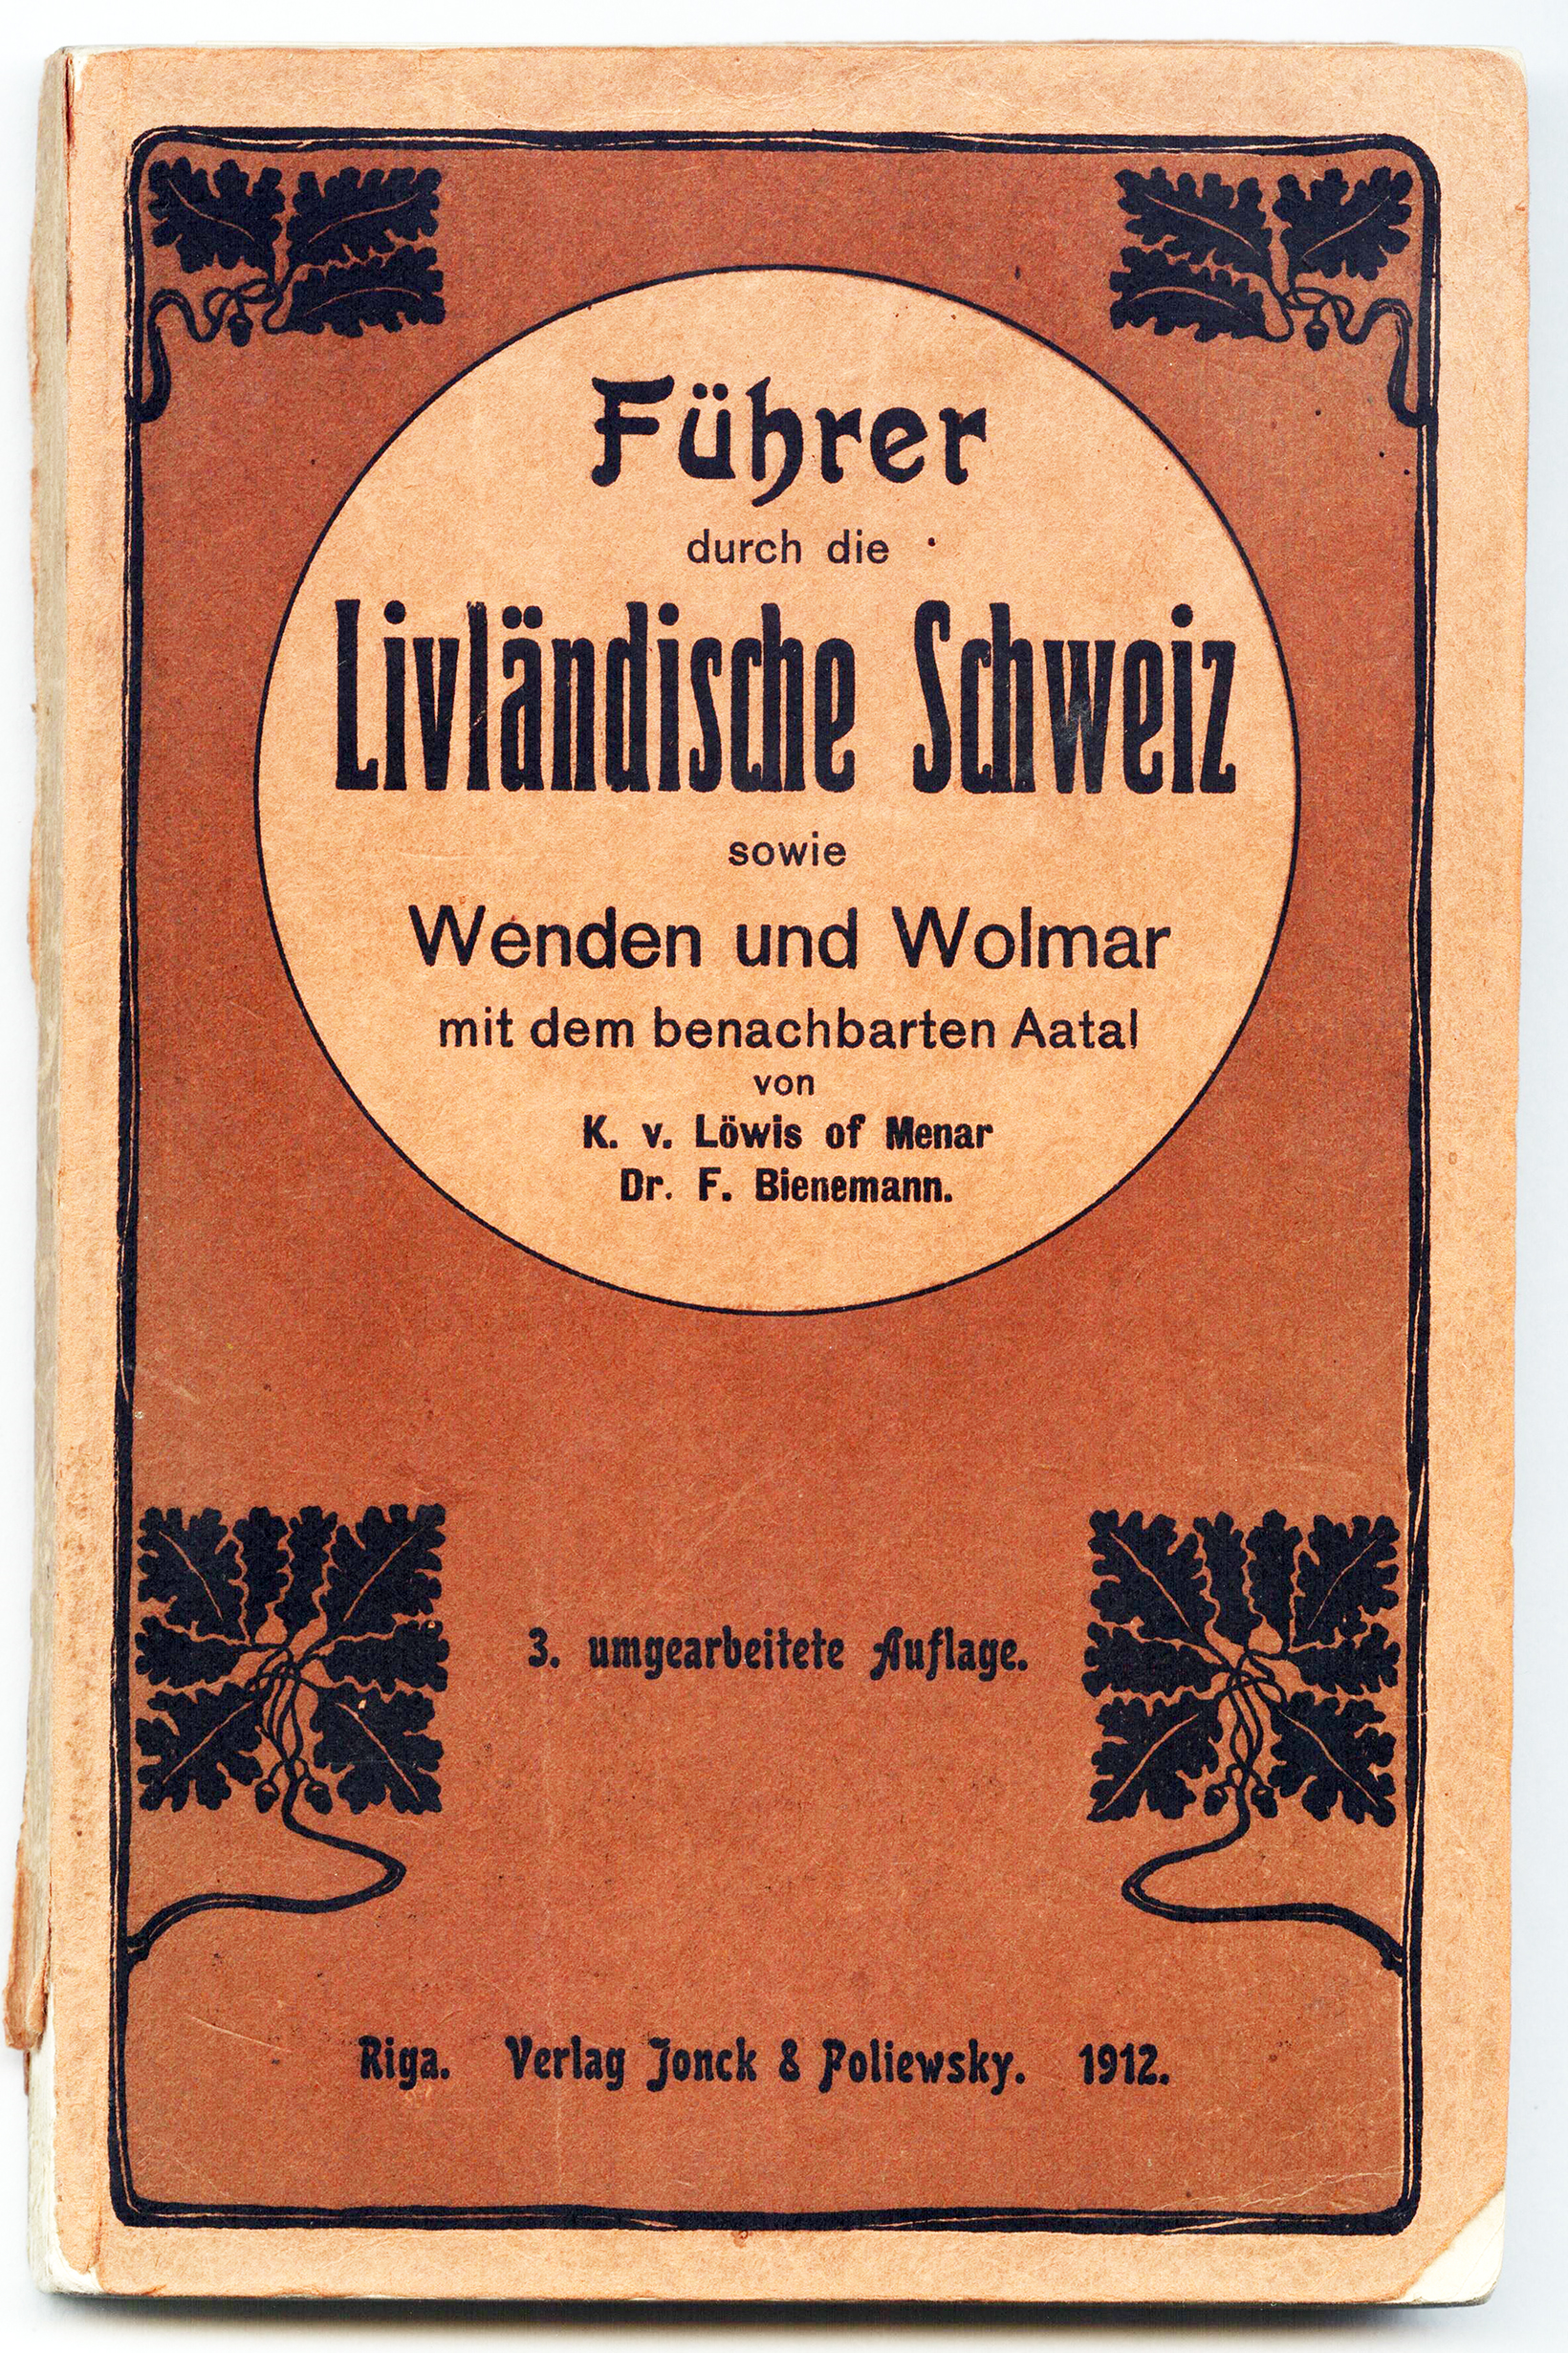 K. fon Lē¬viss of Me¬nārs, F. Bī¬ne¬mans, ceļ¬ve¬dis „Va¬do¬nis pa Vid¬ze¬mes Švei¬ci” (Führer durch die Livländische Schweiz), 1912. gads. TMR 17393